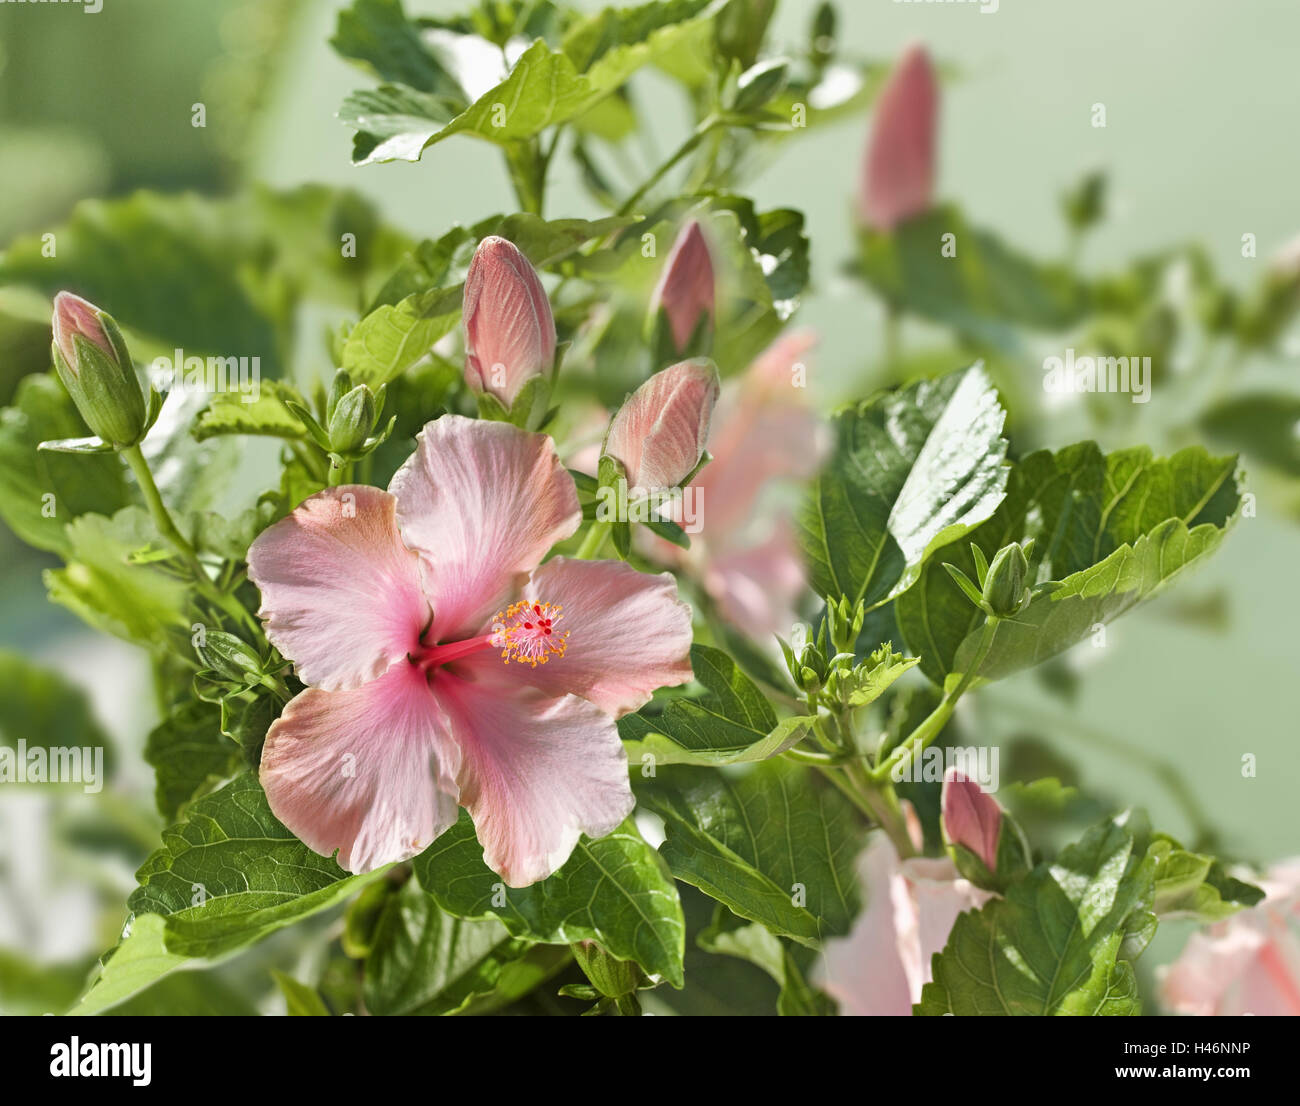 Hibiscus, Hibiscus Rose sinensis, marsh mallow, mallow plant, Stock Photo